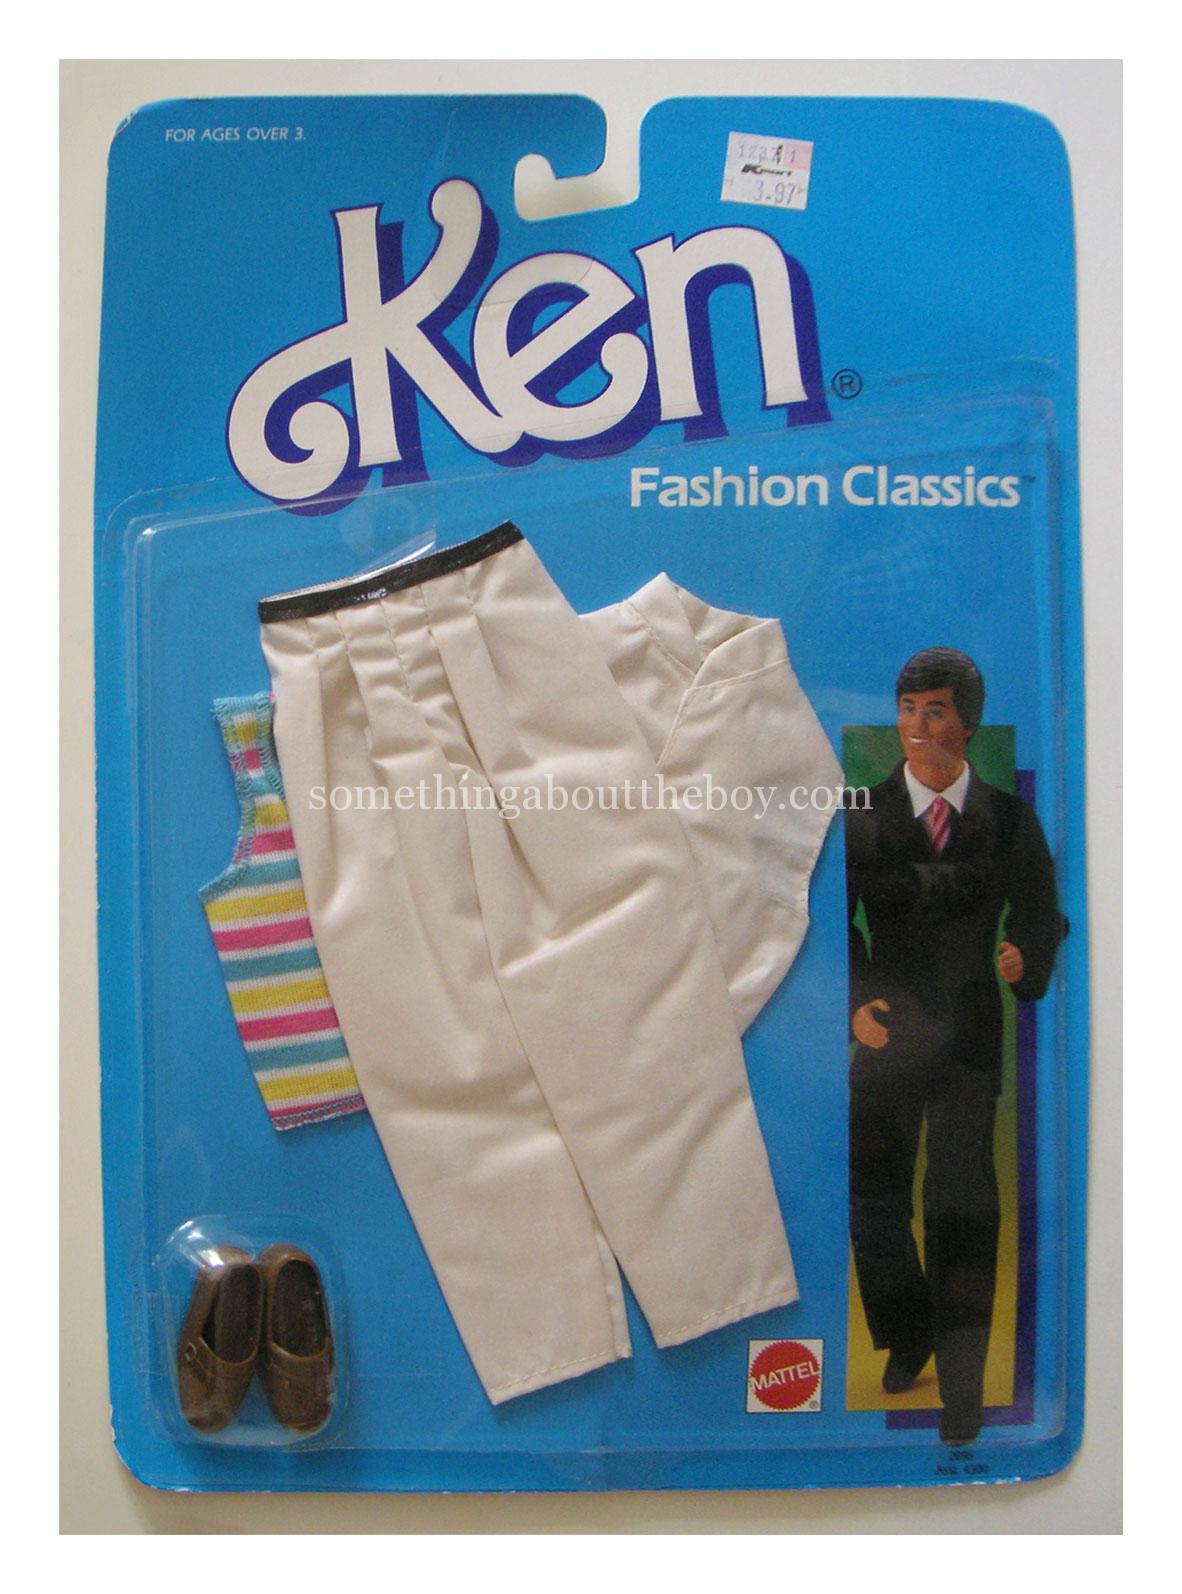 1986-87 Kmart Fashion Classics #2896 in original packaging